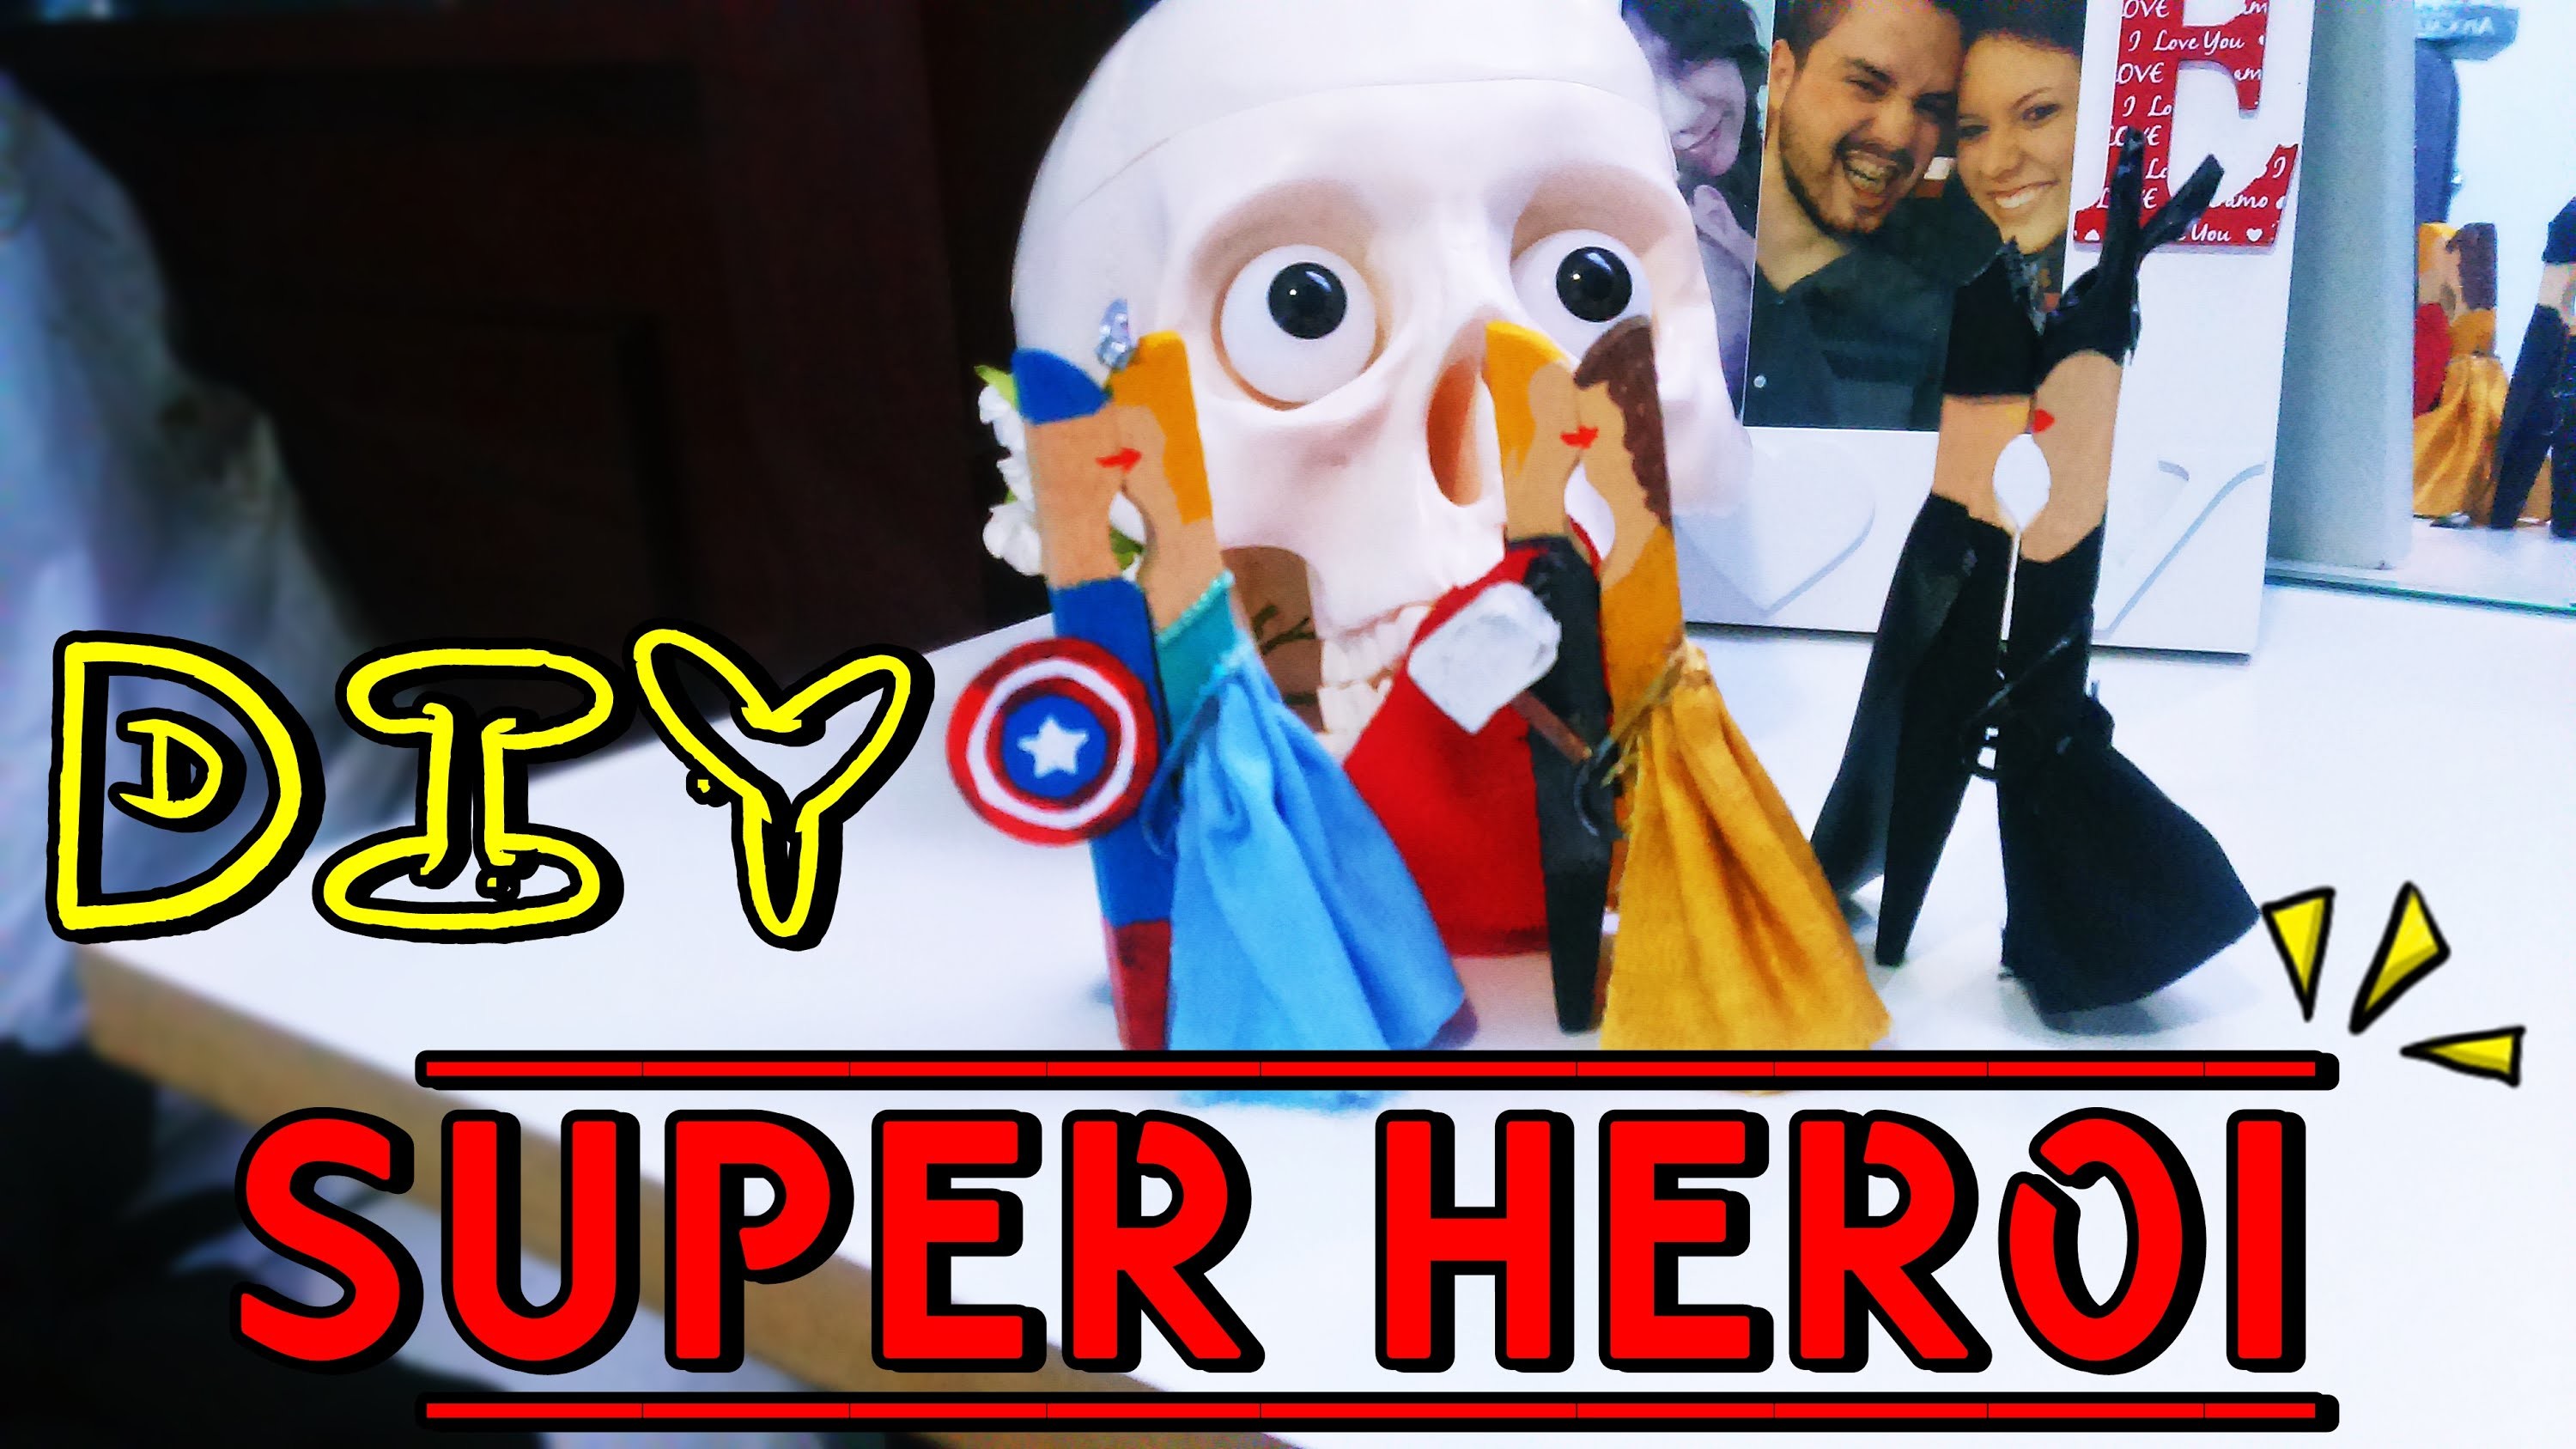 Super Herói Porta Bilhete - DIY (Faça voce mesmo)